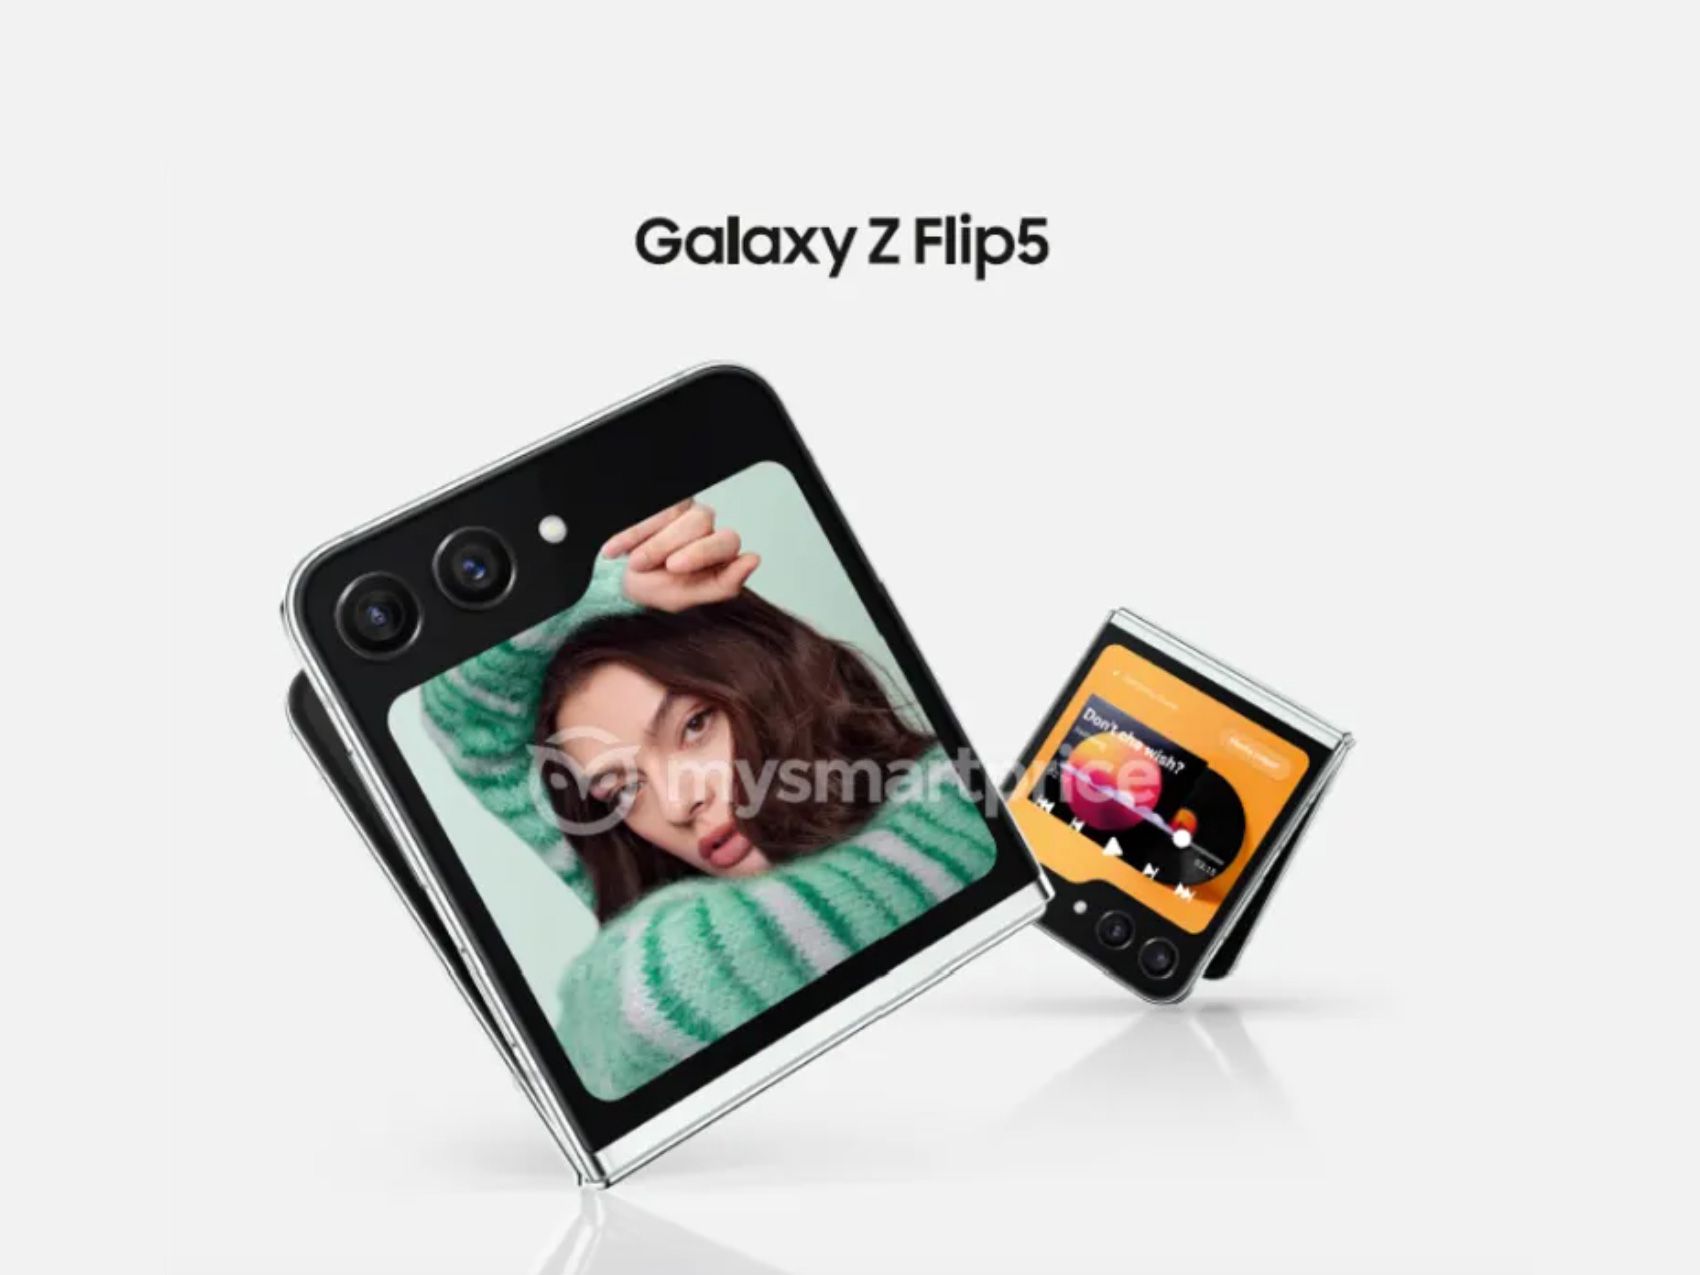 +20%: Samsung kan øke prisen på Galaxy Flip 5 clamshell betydelig